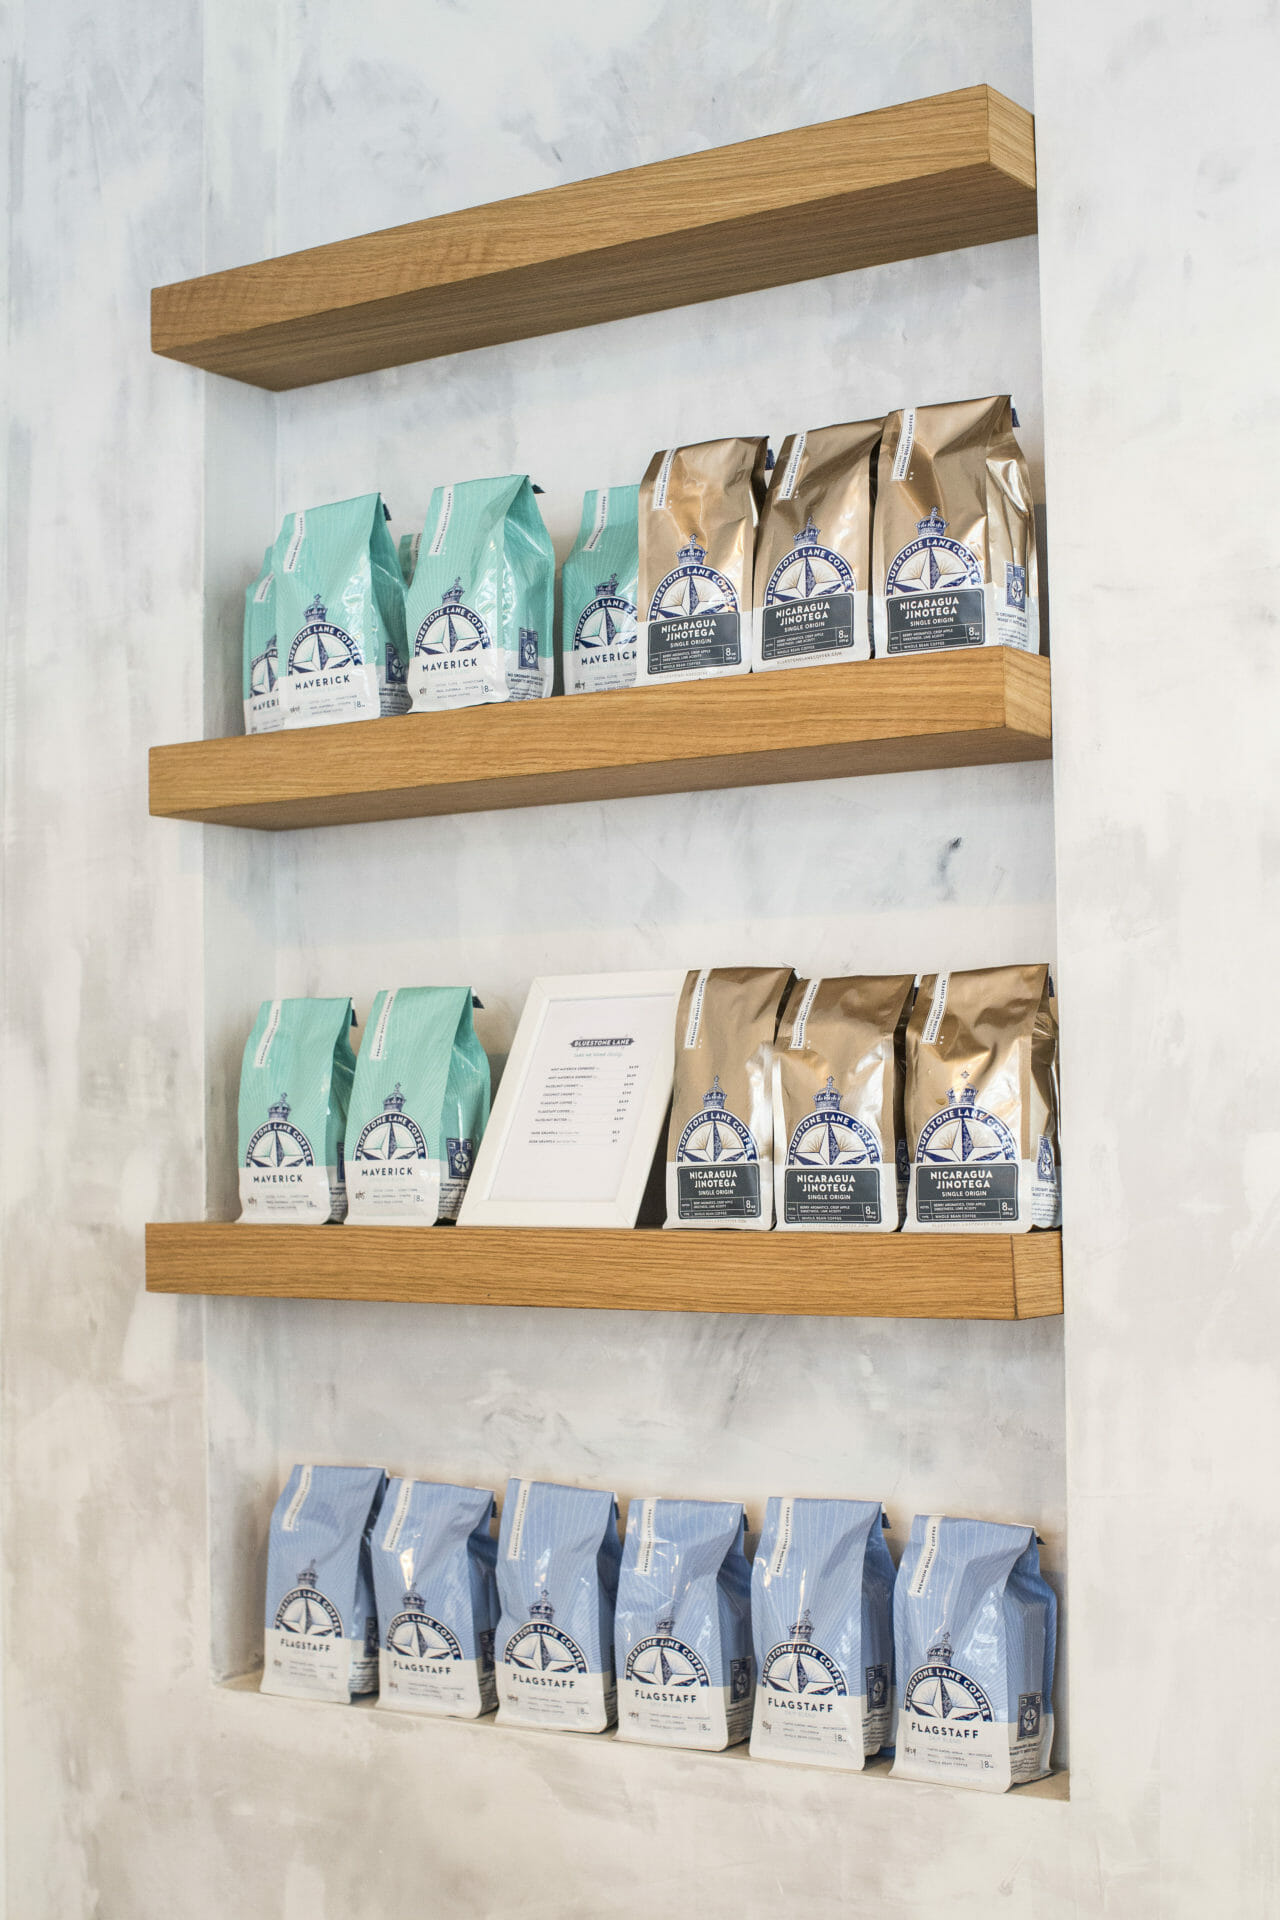 retail coffee shelf with Bluestone Lane retails bags.